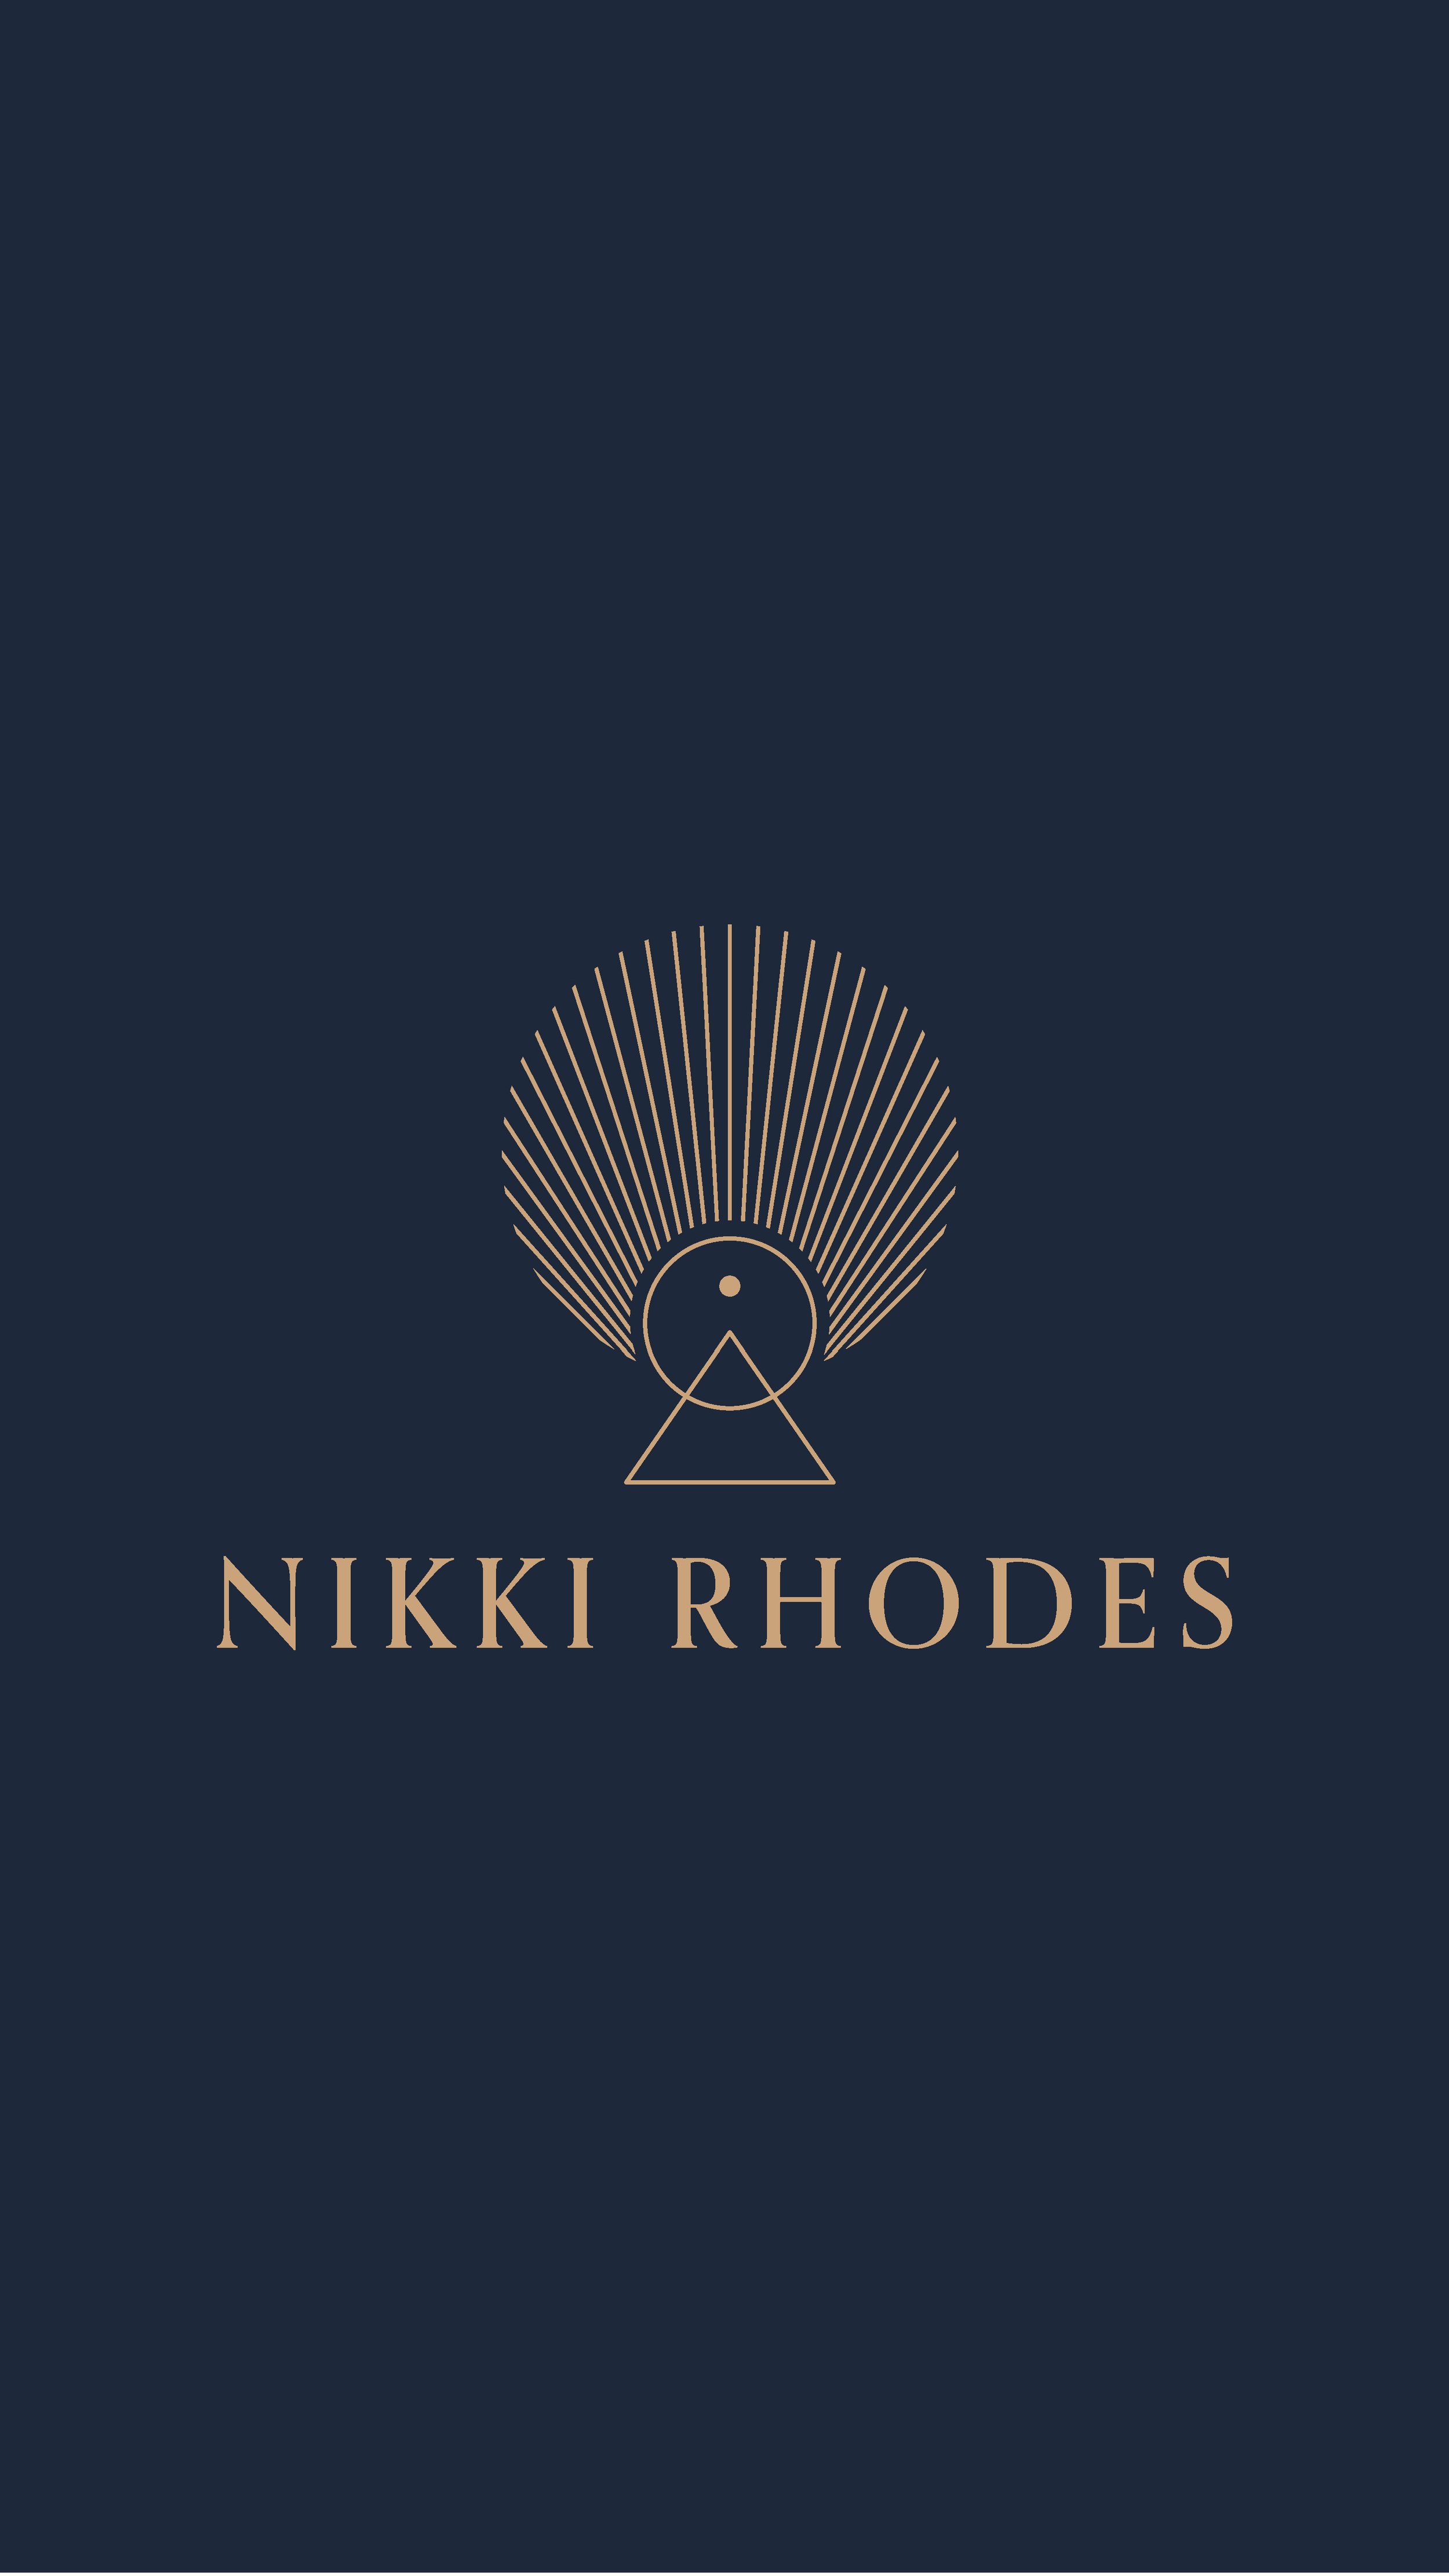 Nikki Rhodes Logo Design &amp; Branding